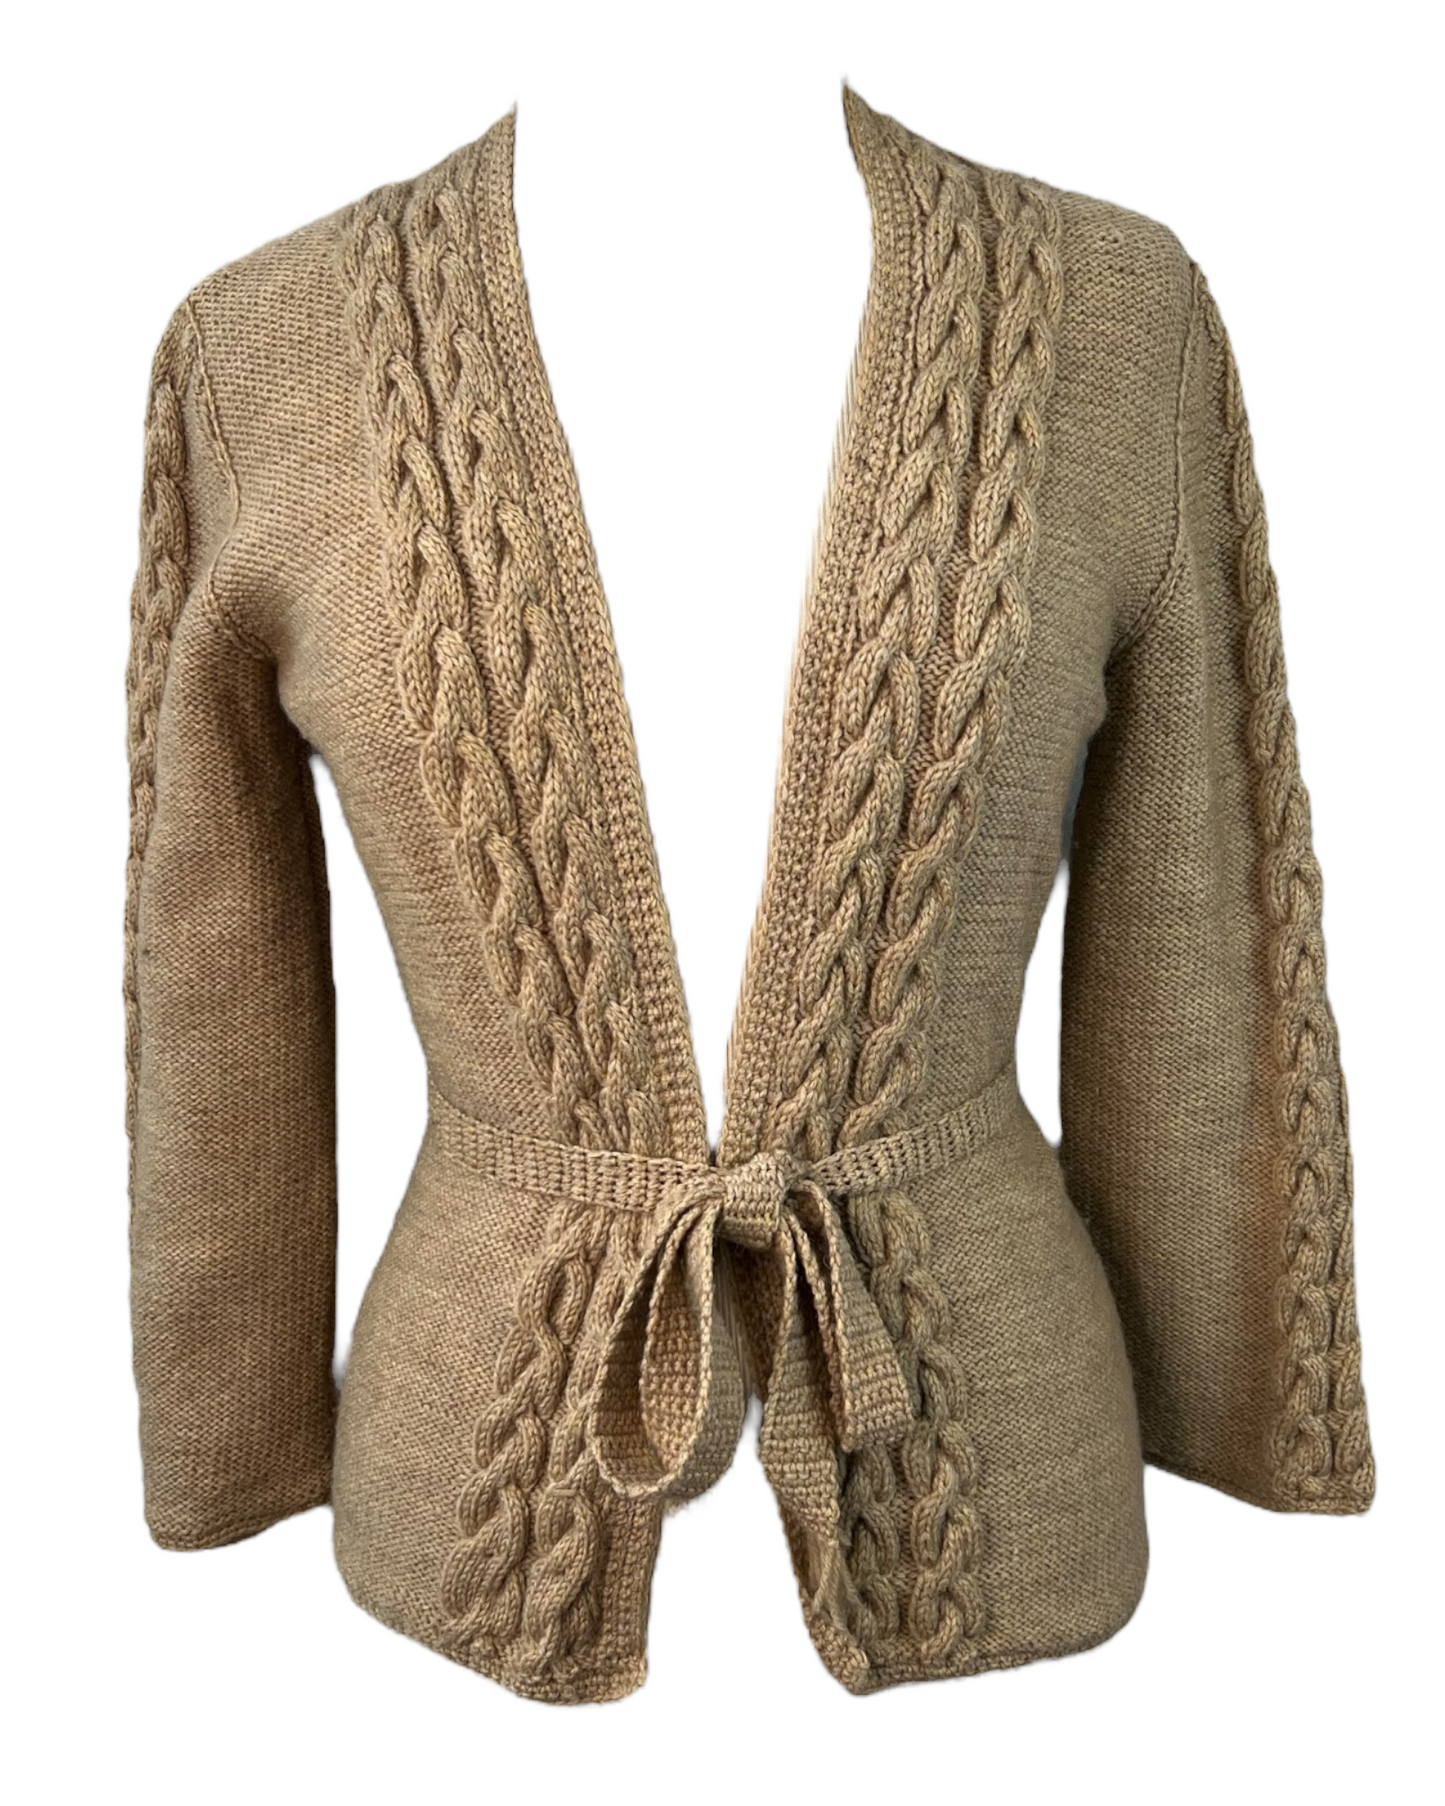 Vintage Camel Cable Knit Cardigan